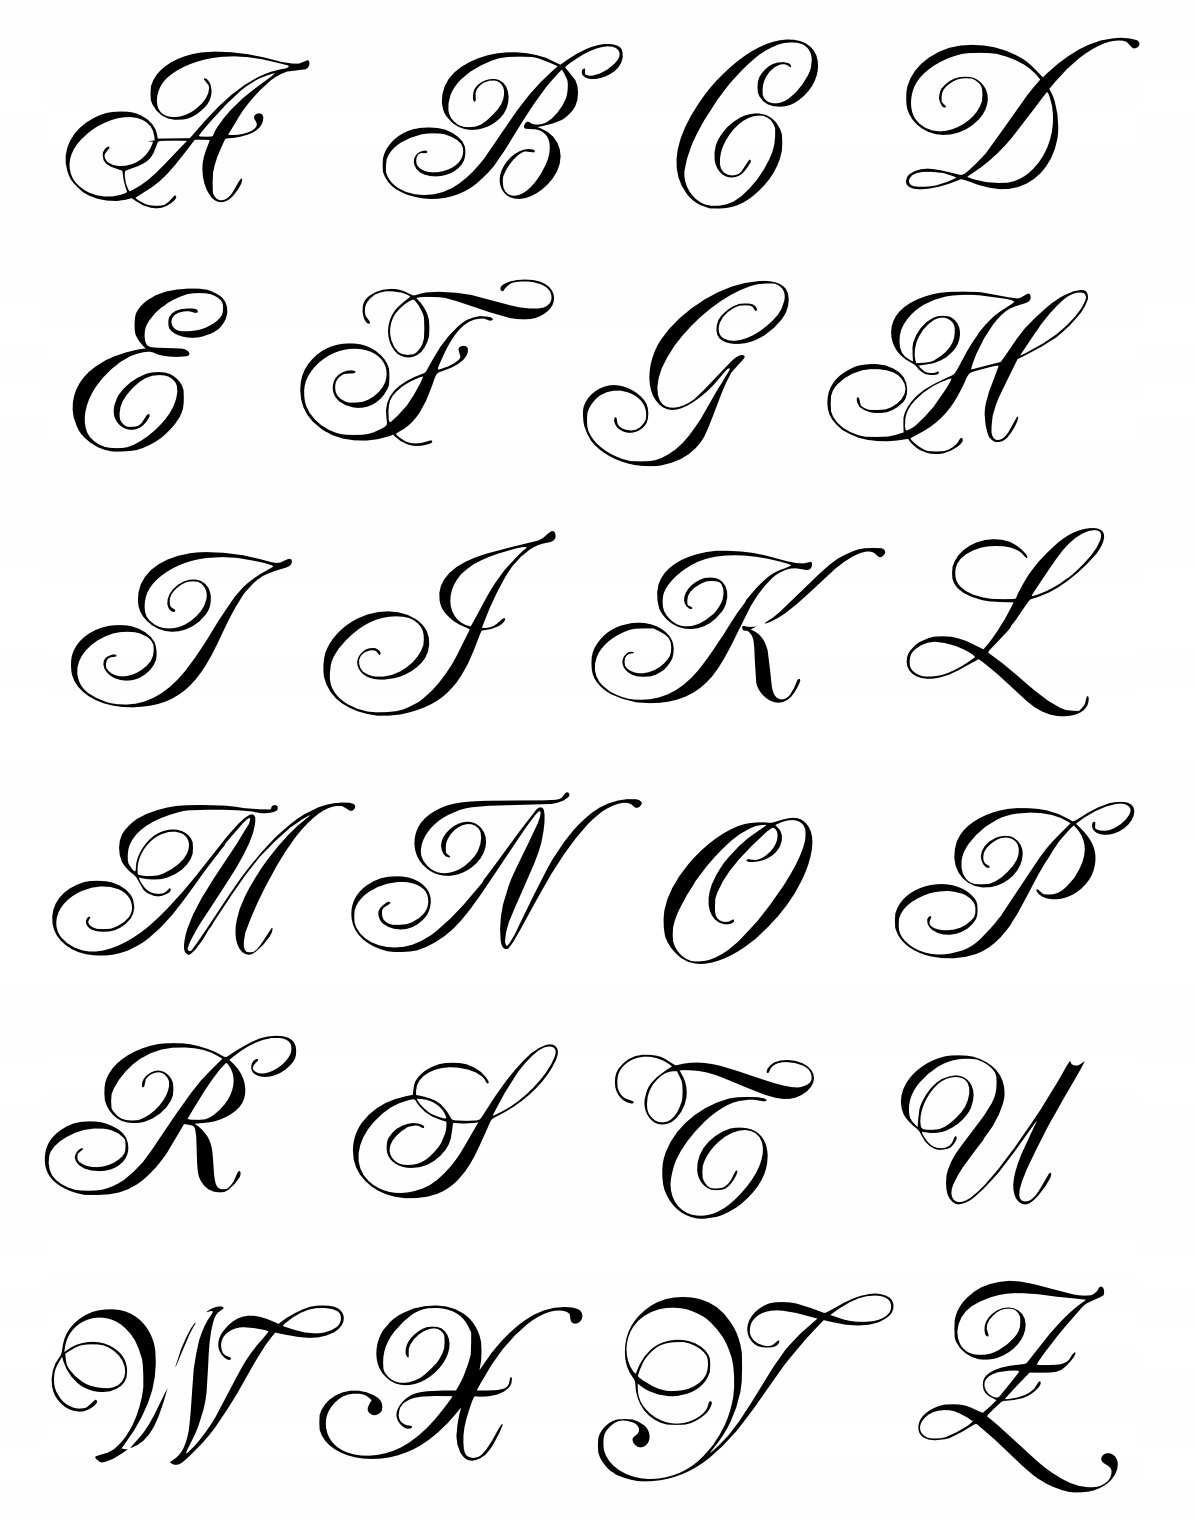 Найди красивый шрифт. Красивые буквы. Красивые буквы алфавита. Буквы красивым шрифтом. Буквы кра ивым шрифтом.